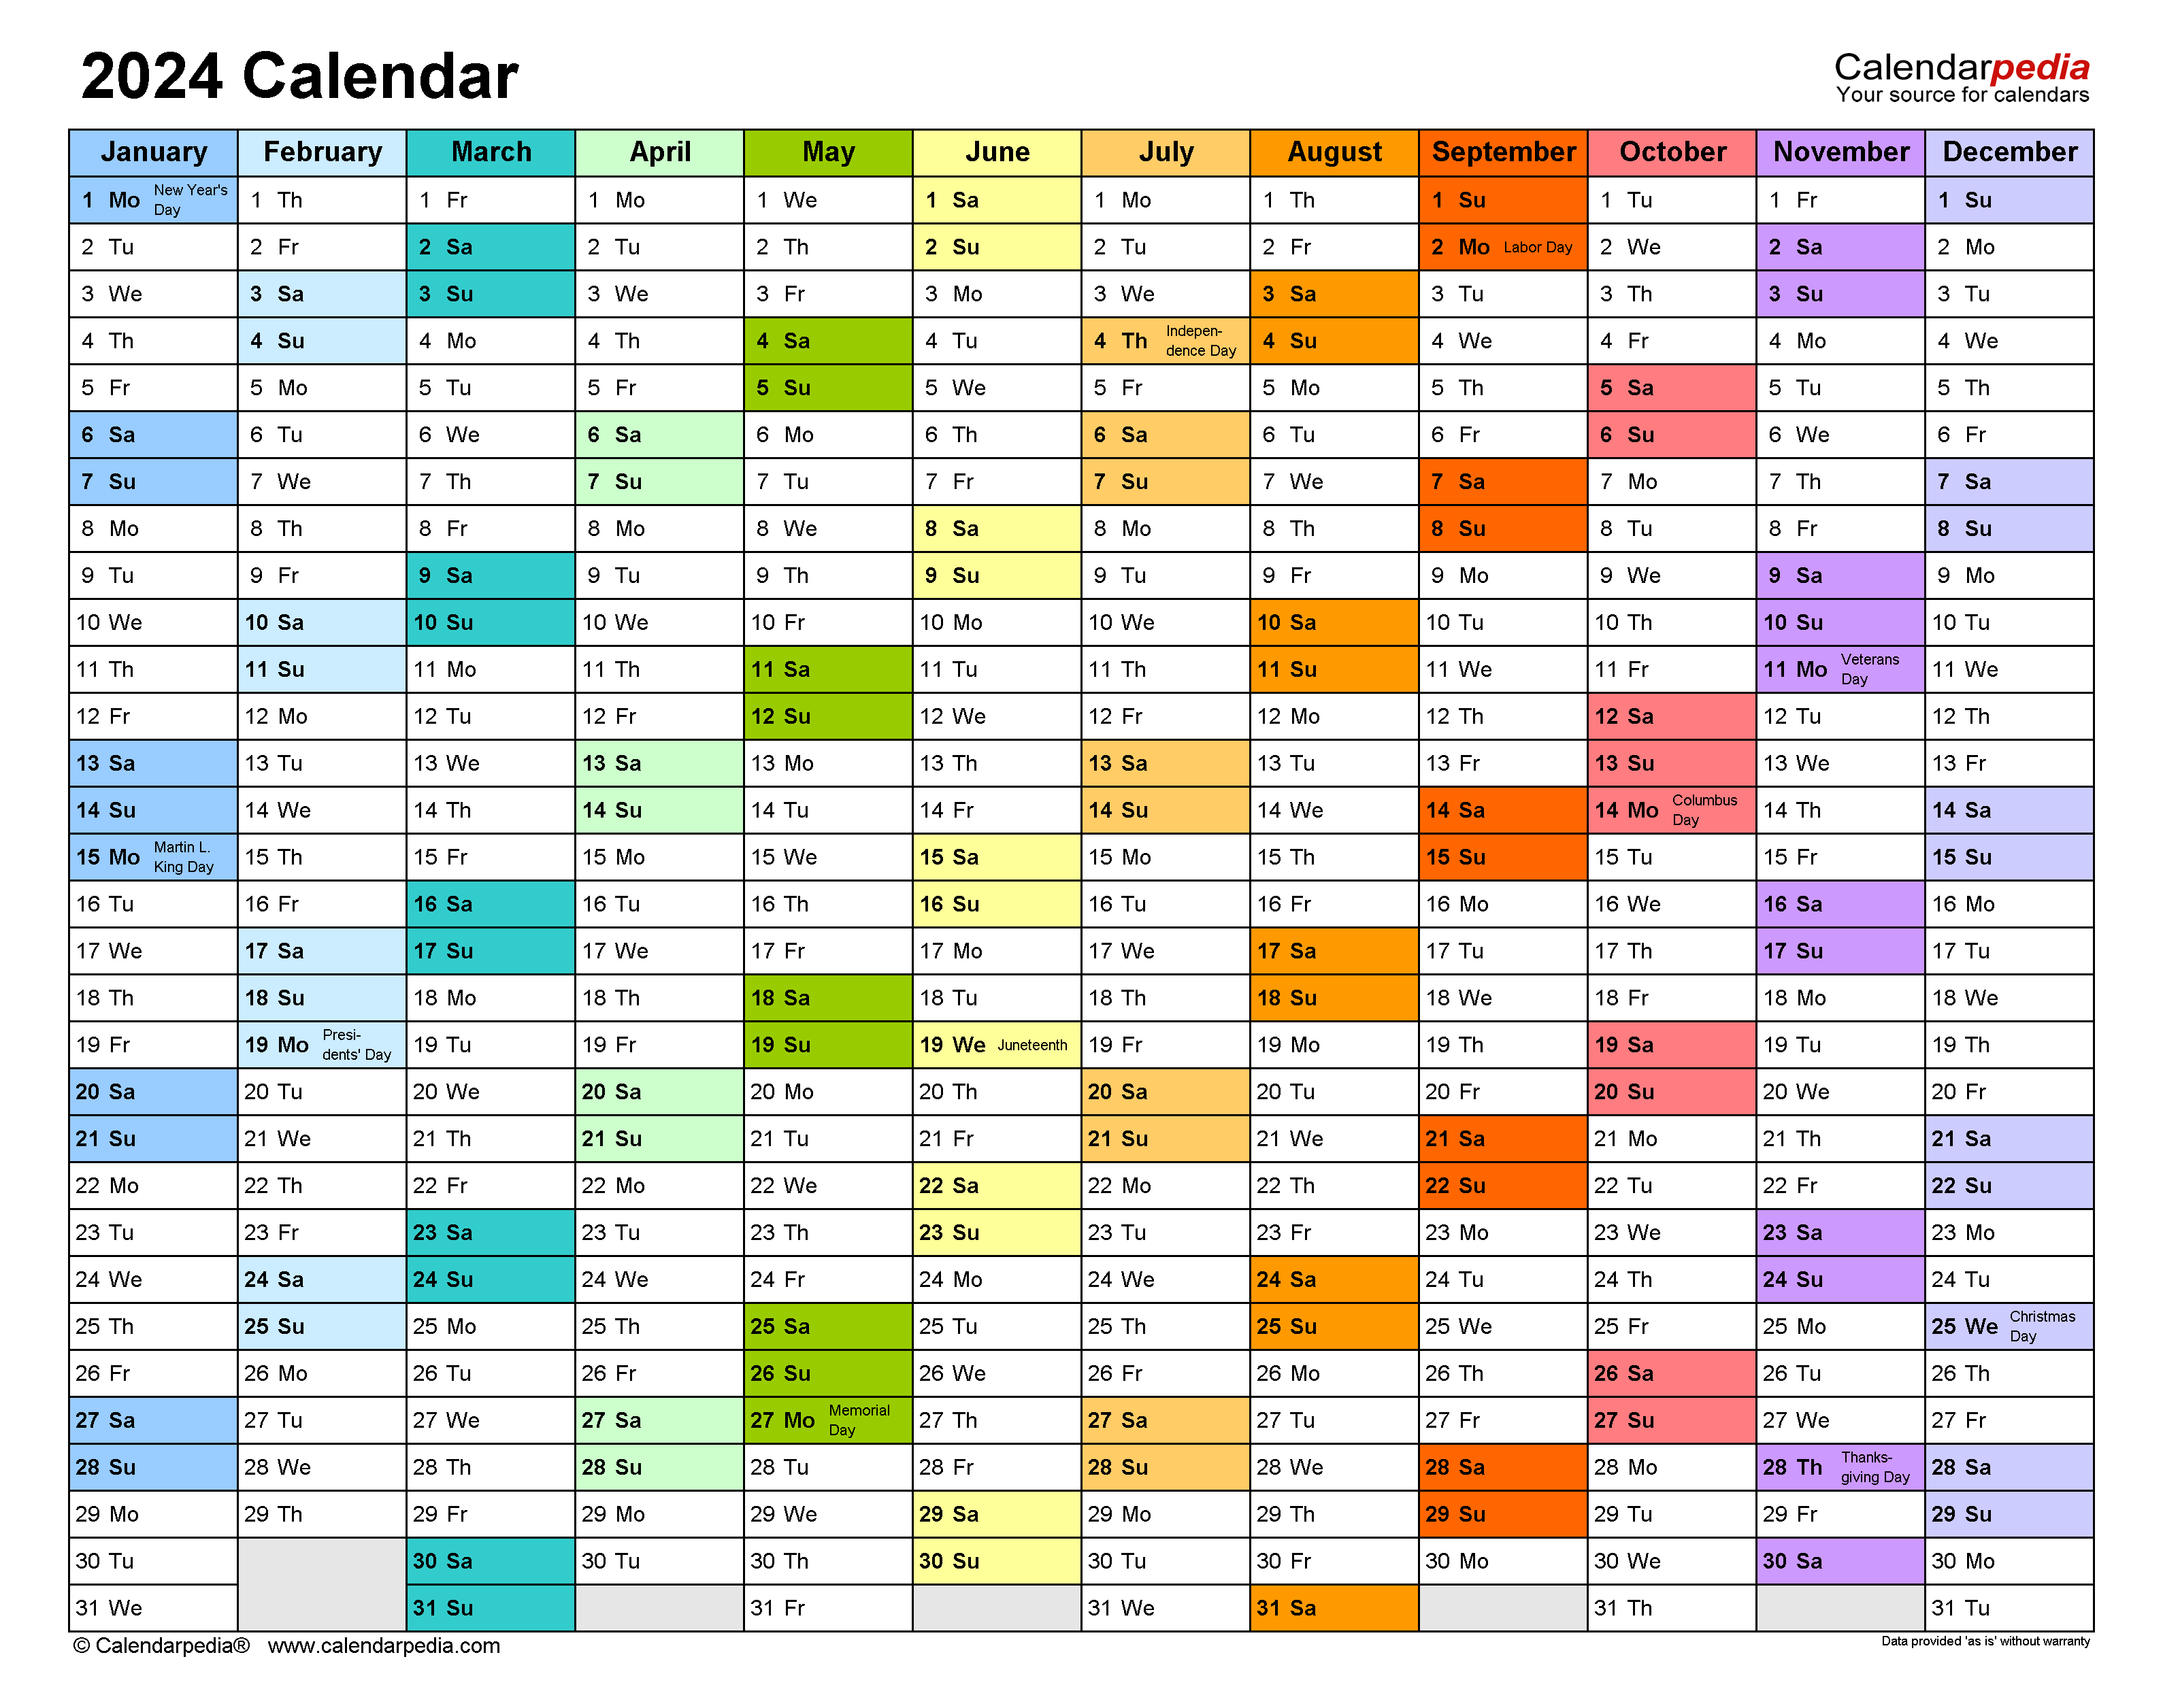 2024 Calendar - Free Printable Word Templates - Calendarpedia for Free Printable Word Calendar 2024